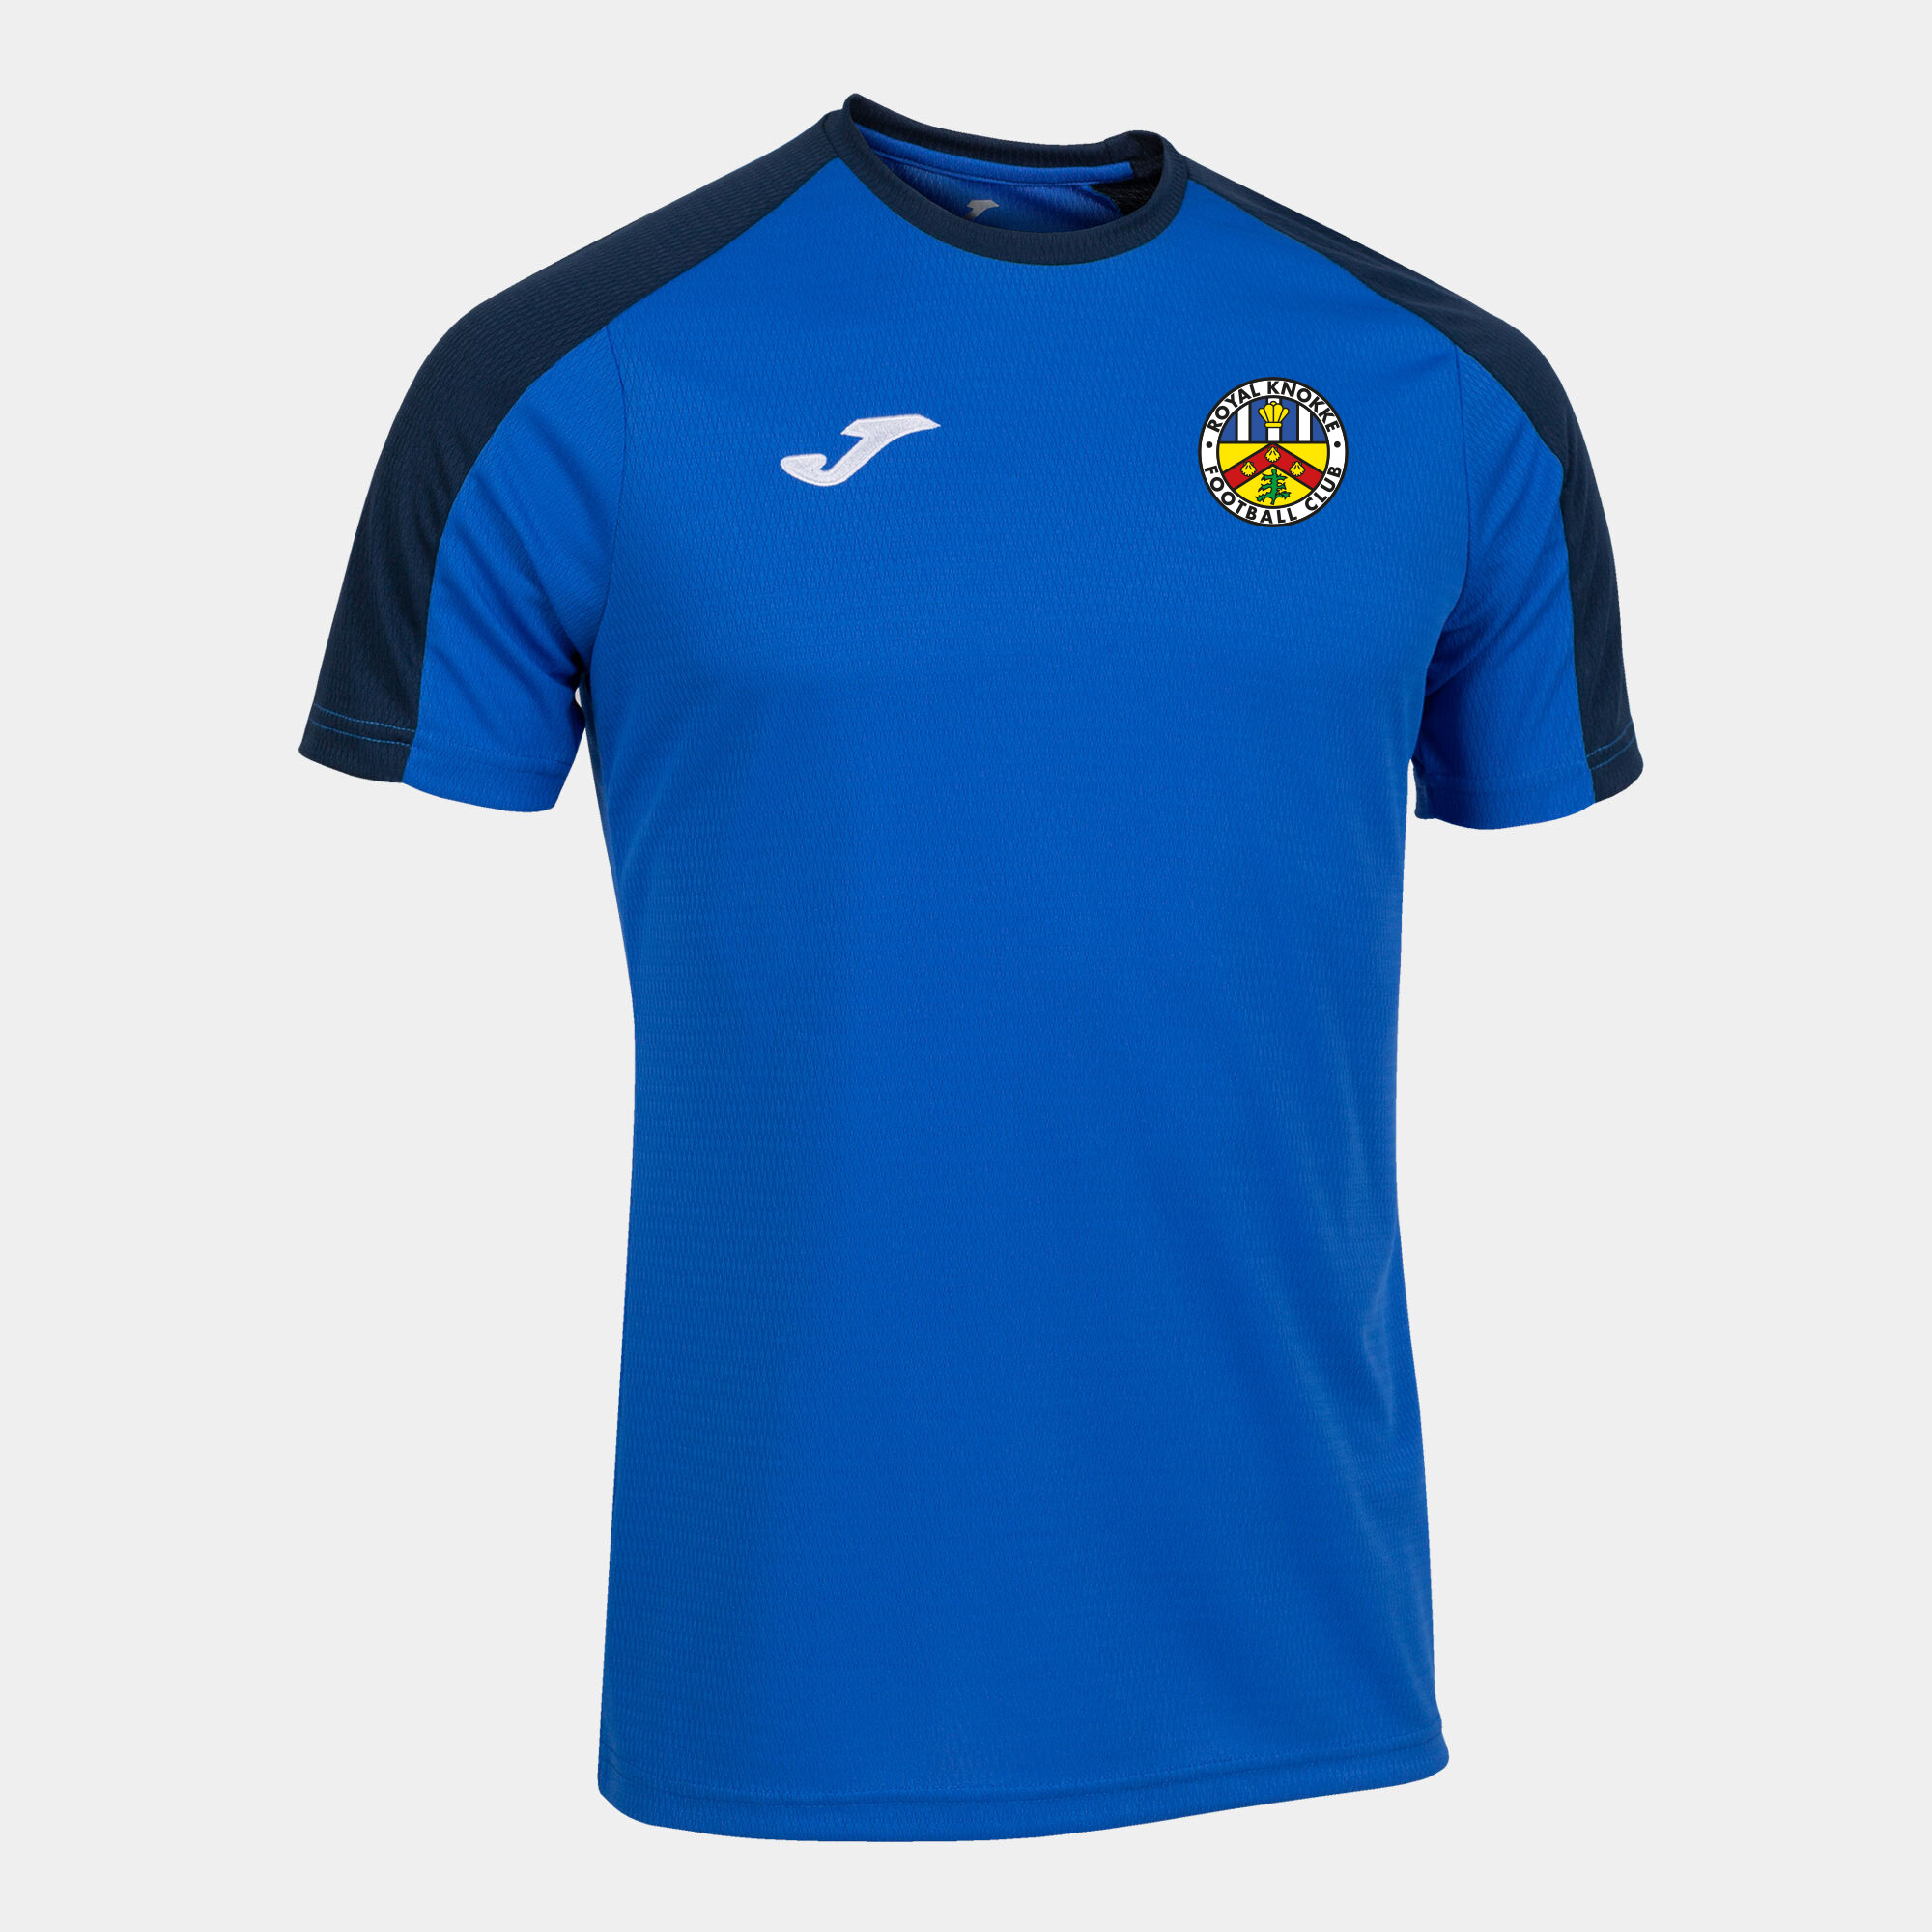 Royal Knokke FC - Shirt short sleeve man Eco Championship royal blue navy blue 